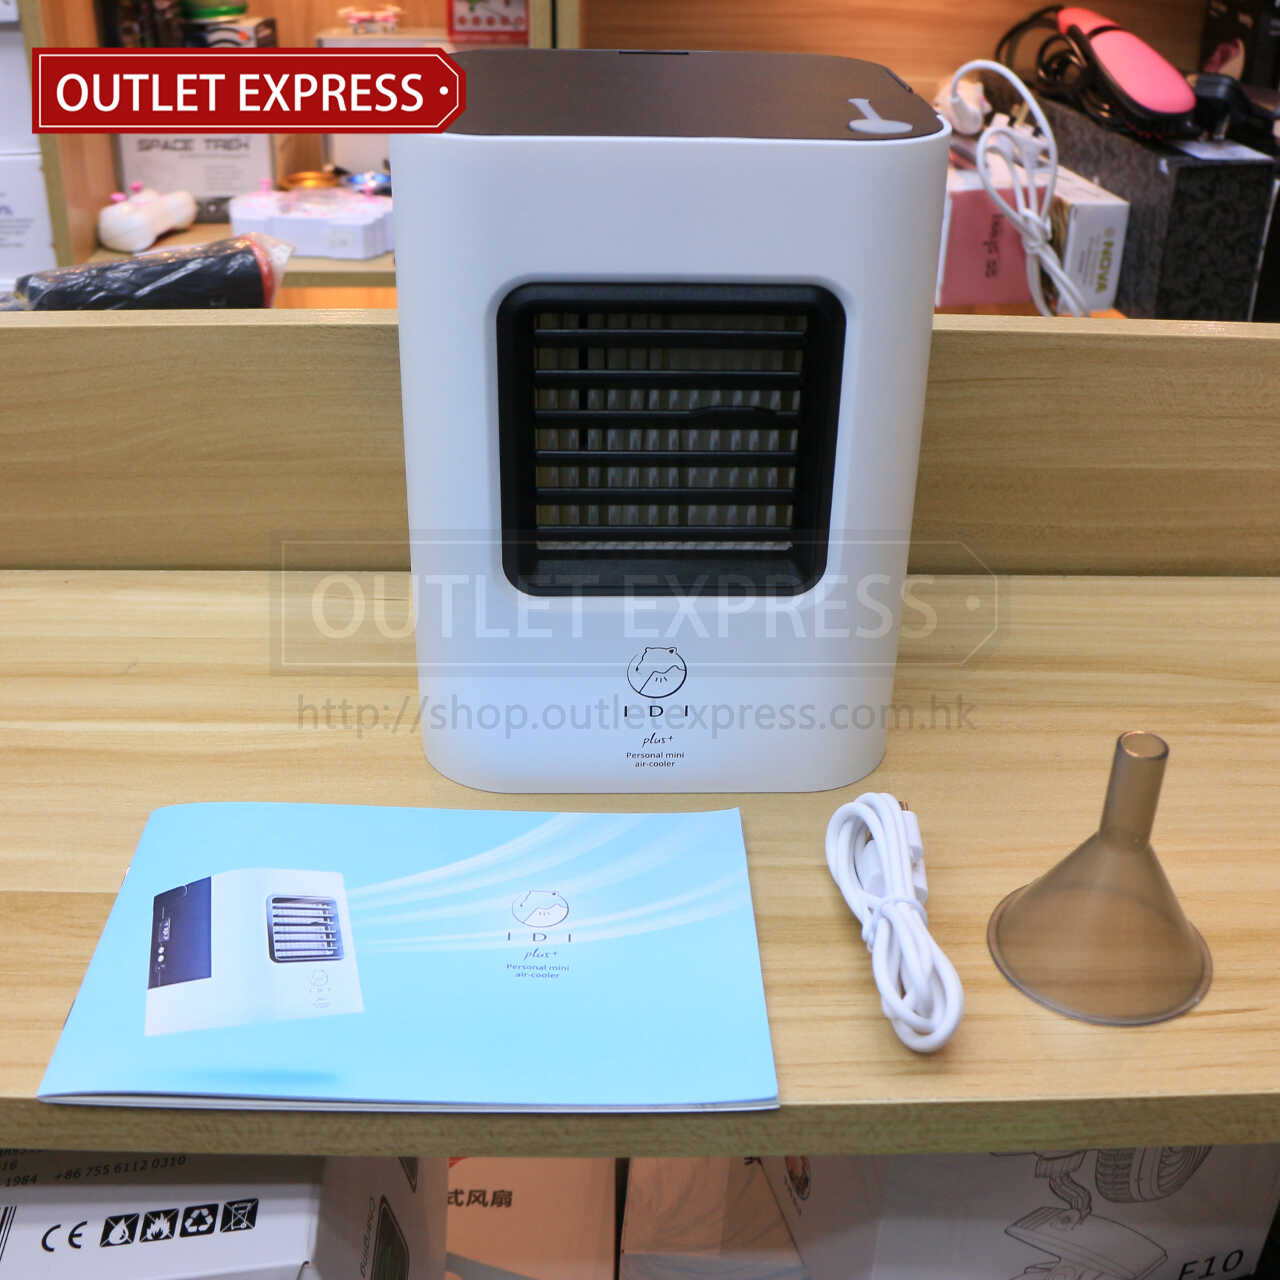 IDI USB 納米攜帶冷風機及配件- Outlet Express HK生活百貨城實拍相片